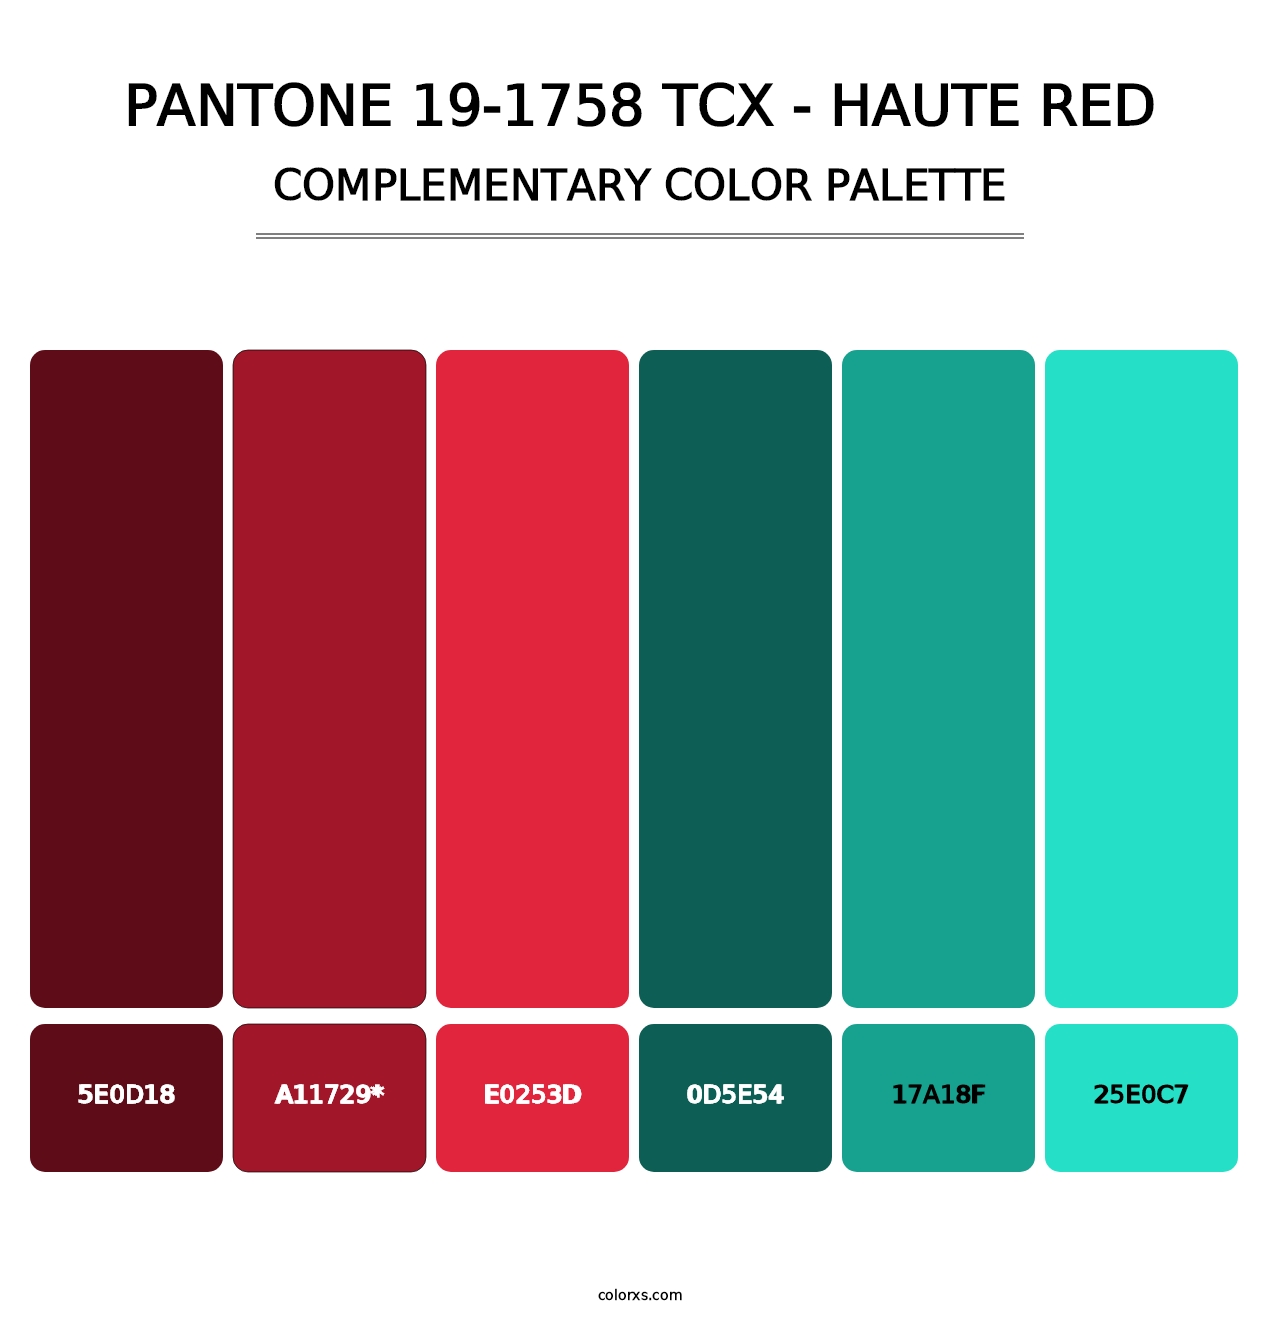 PANTONE 19-1758 TCX - Haute Red - Complementary Color Palette